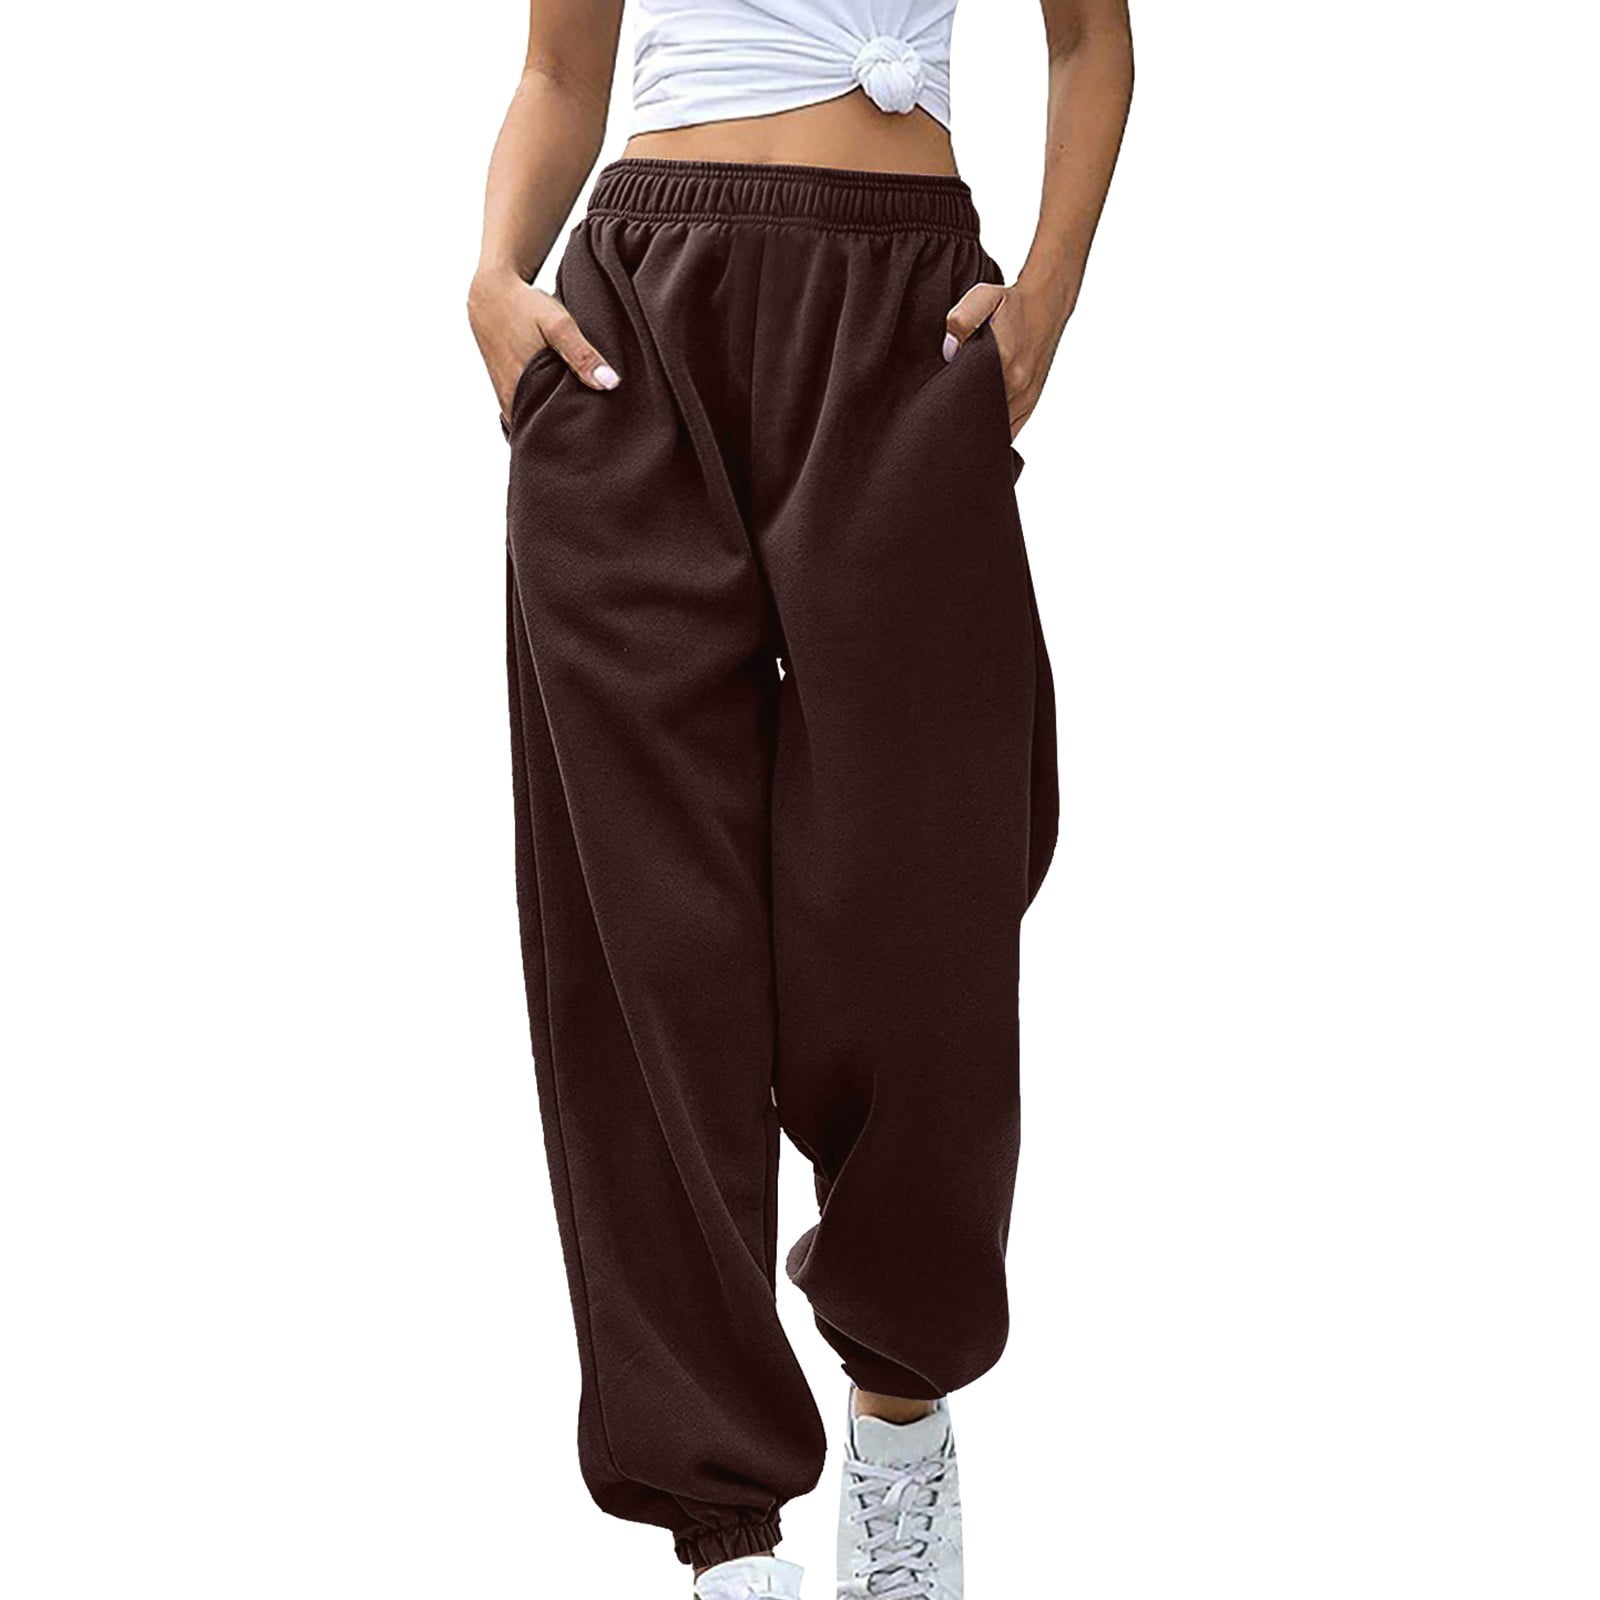 Fulijie Women's Cinch Bottom Sweatpants with Pockets No Drawstring